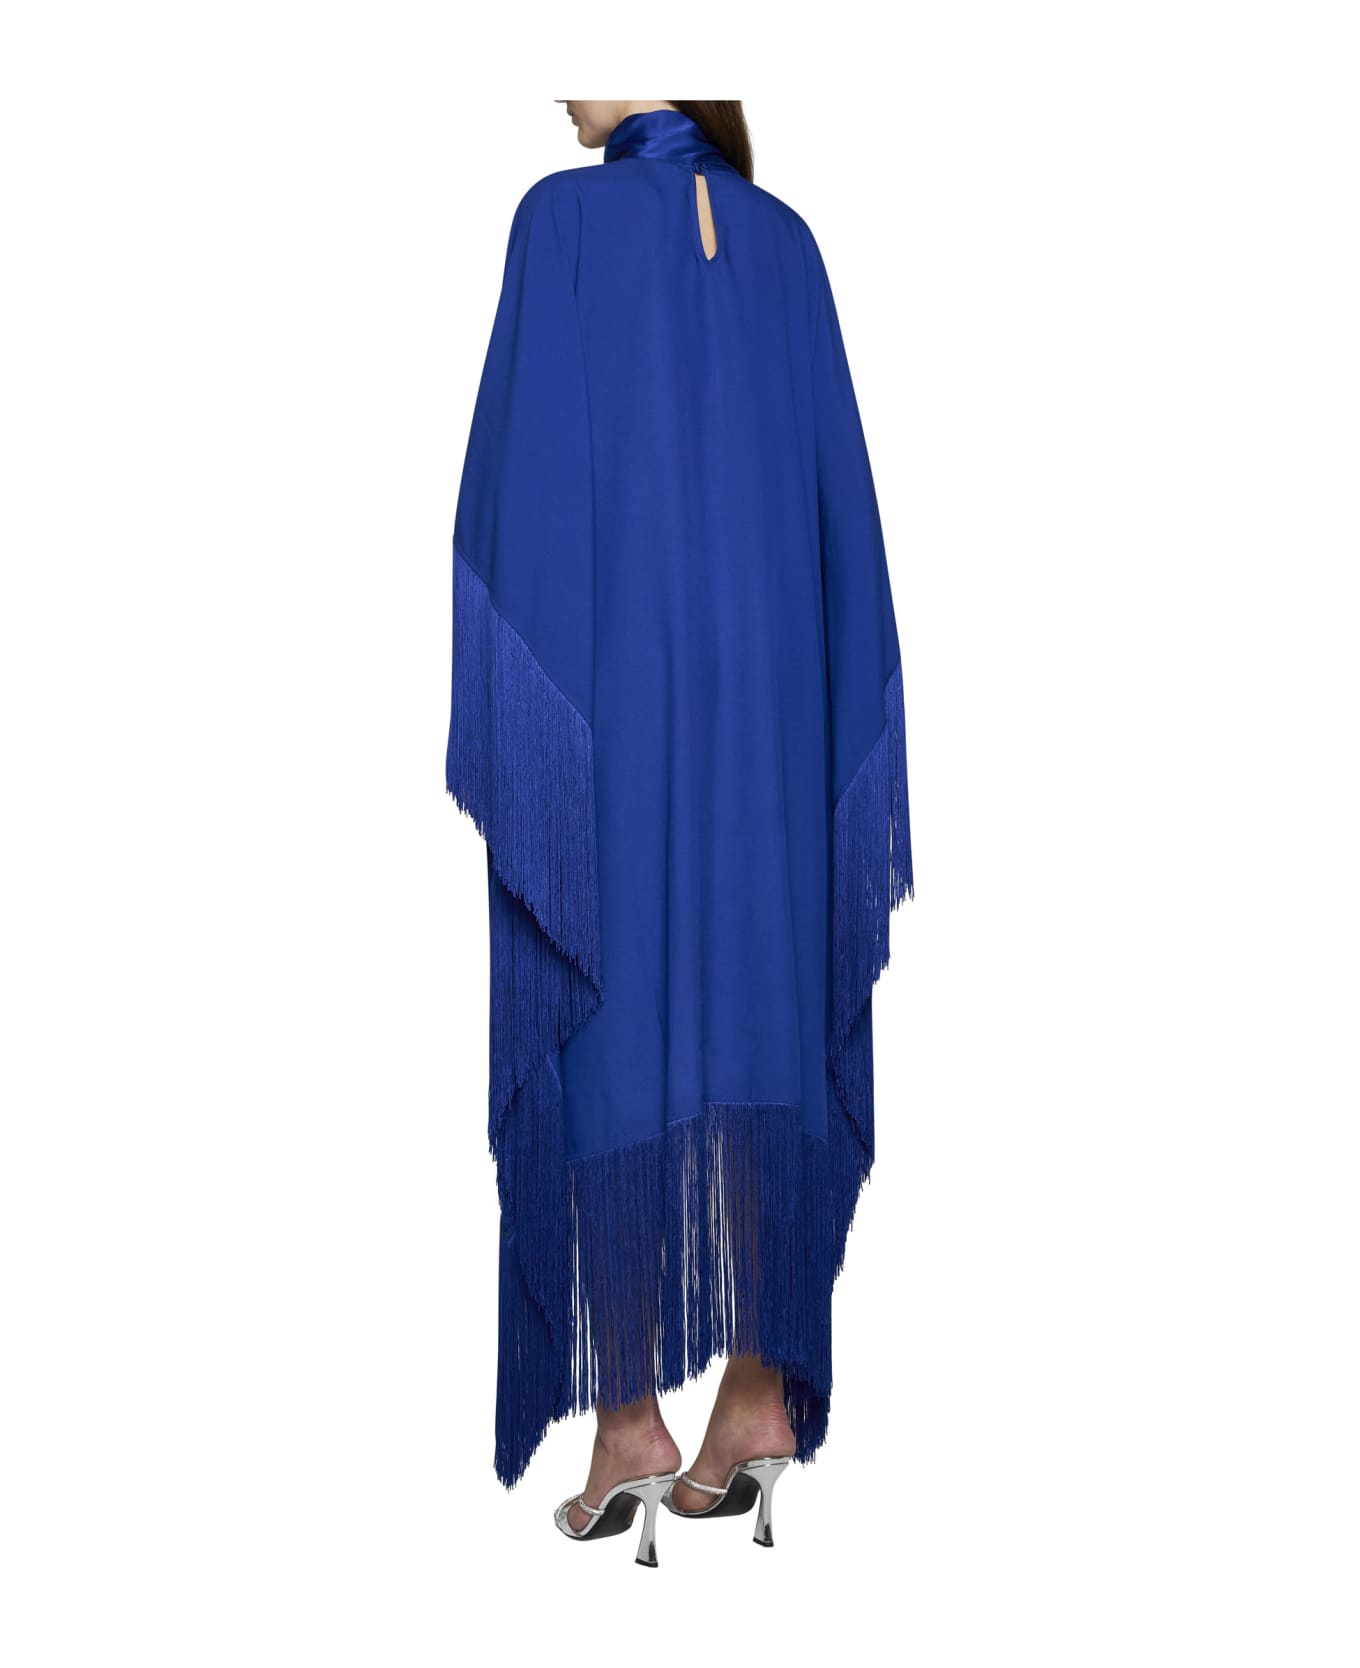 Taller Marmo Dress - Royalblue